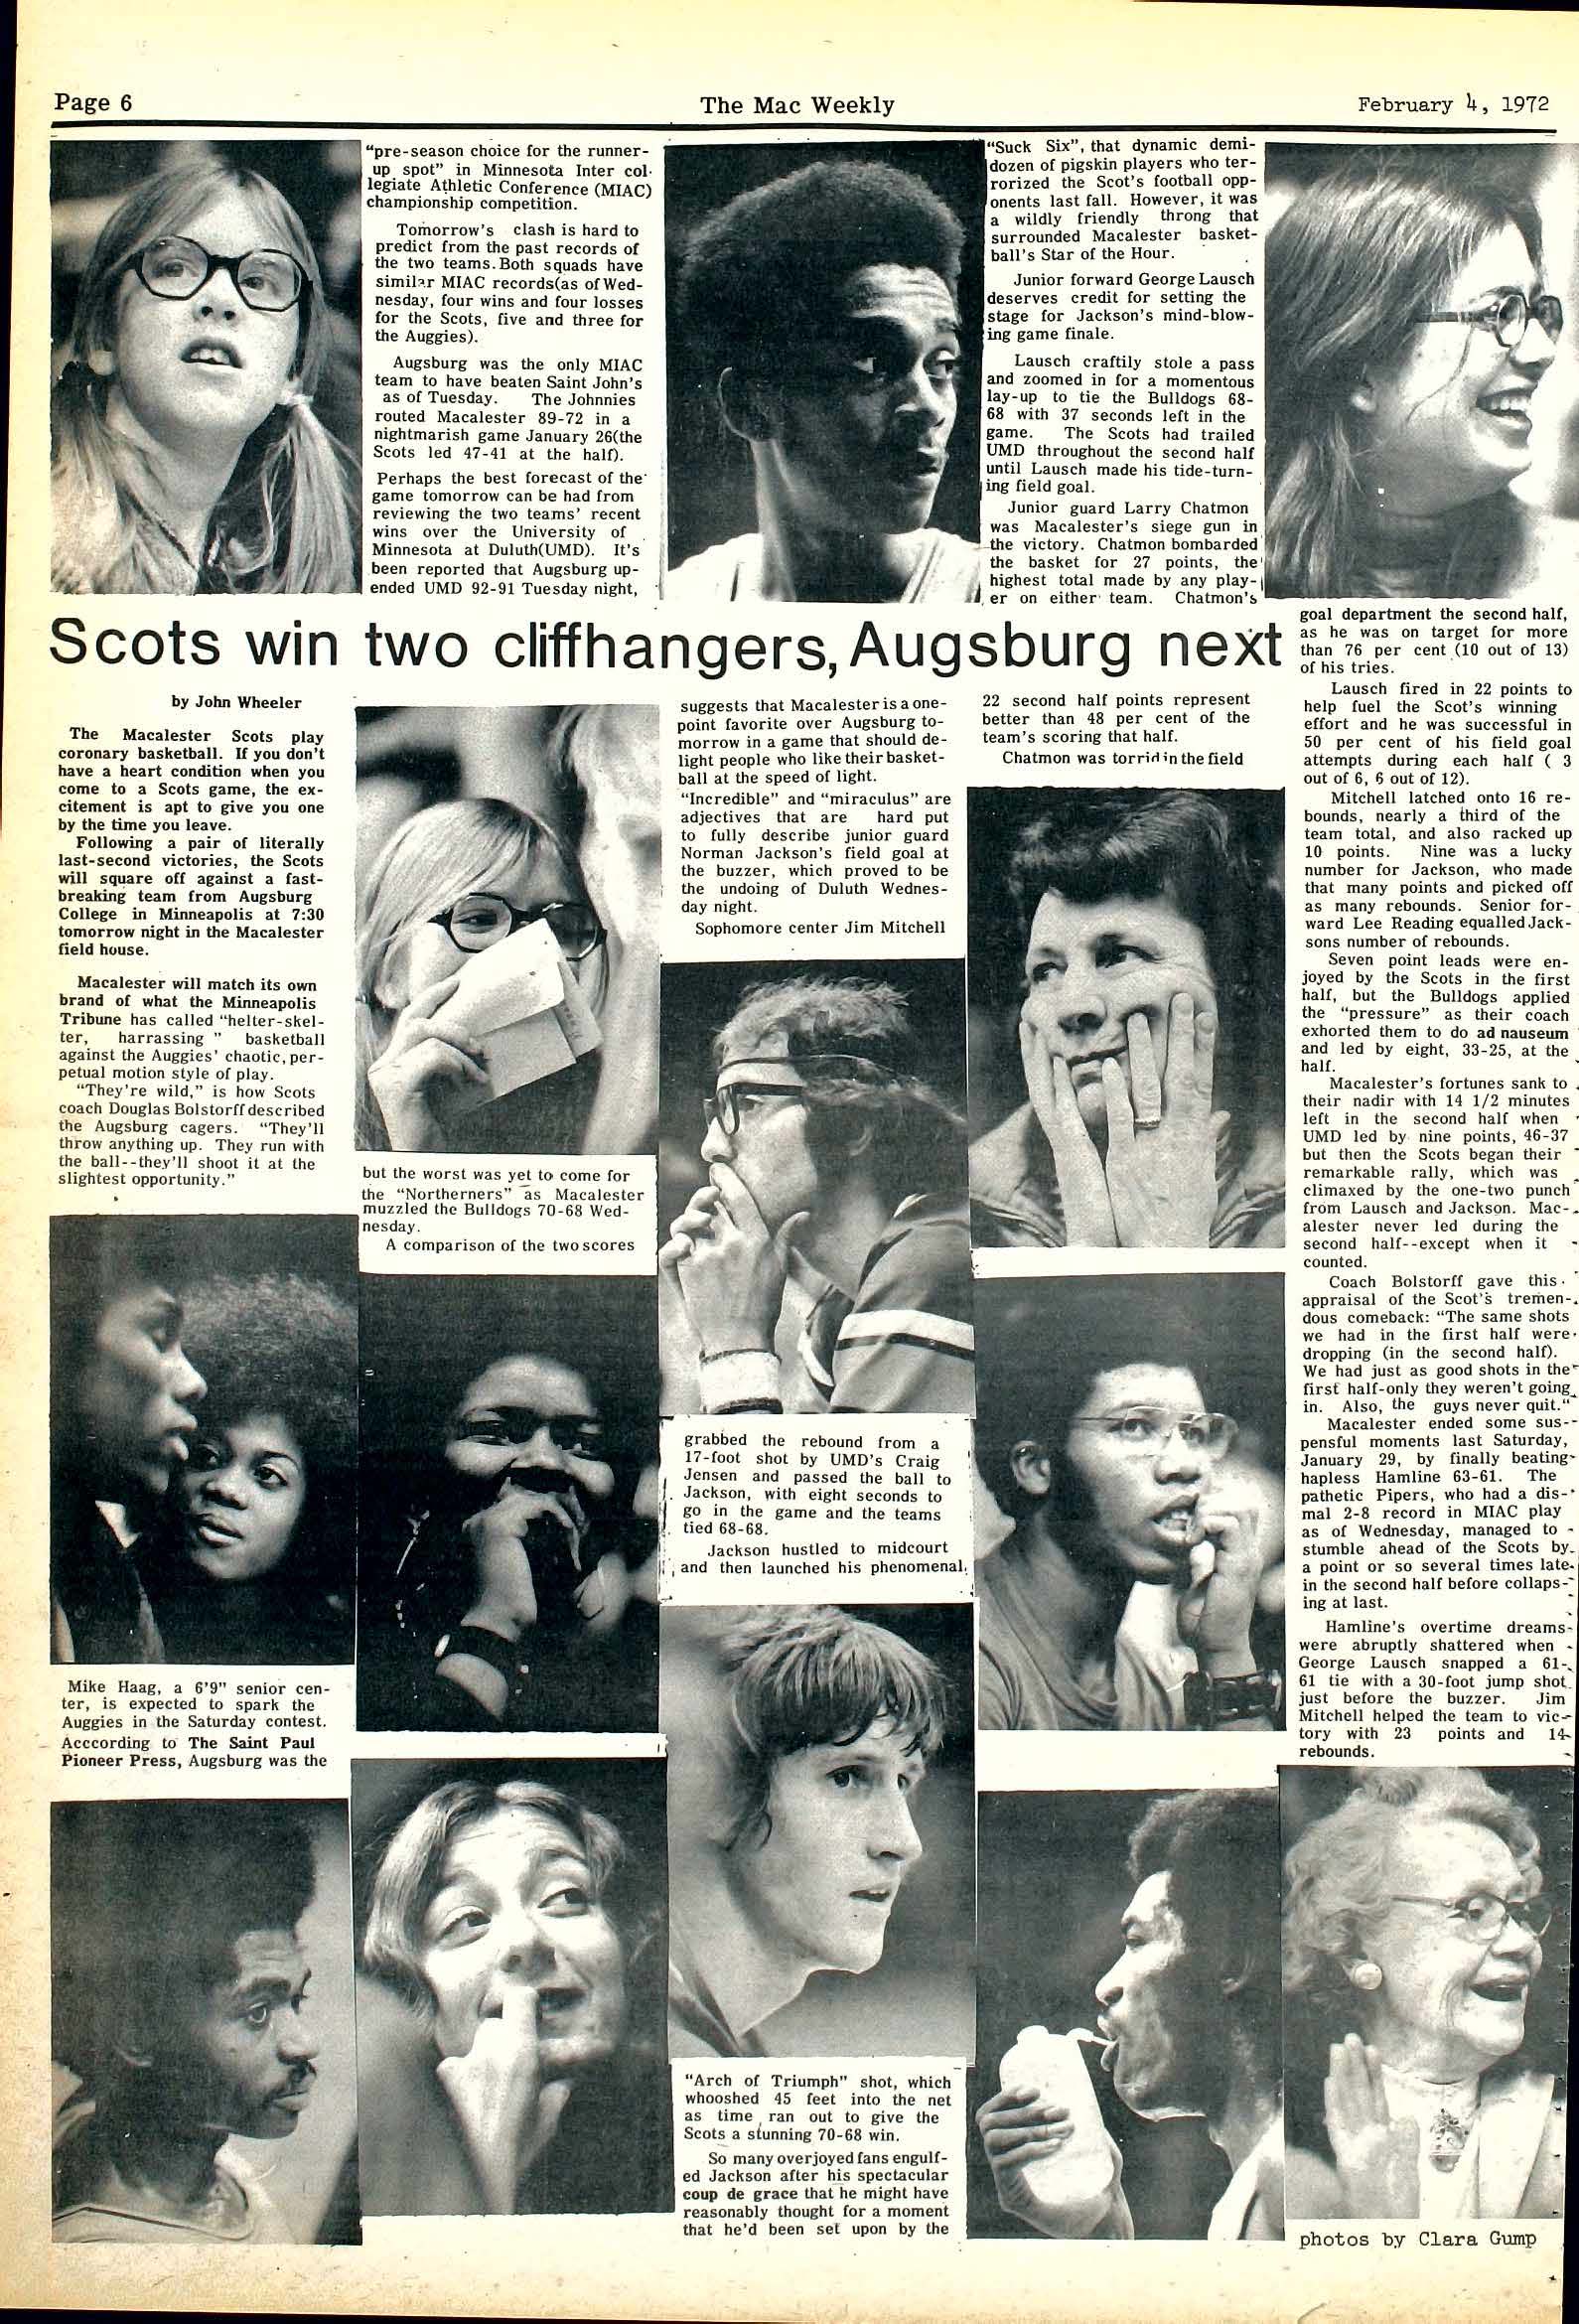 The Mac Weekly, February 4, 1972. "Coronary Basketball."